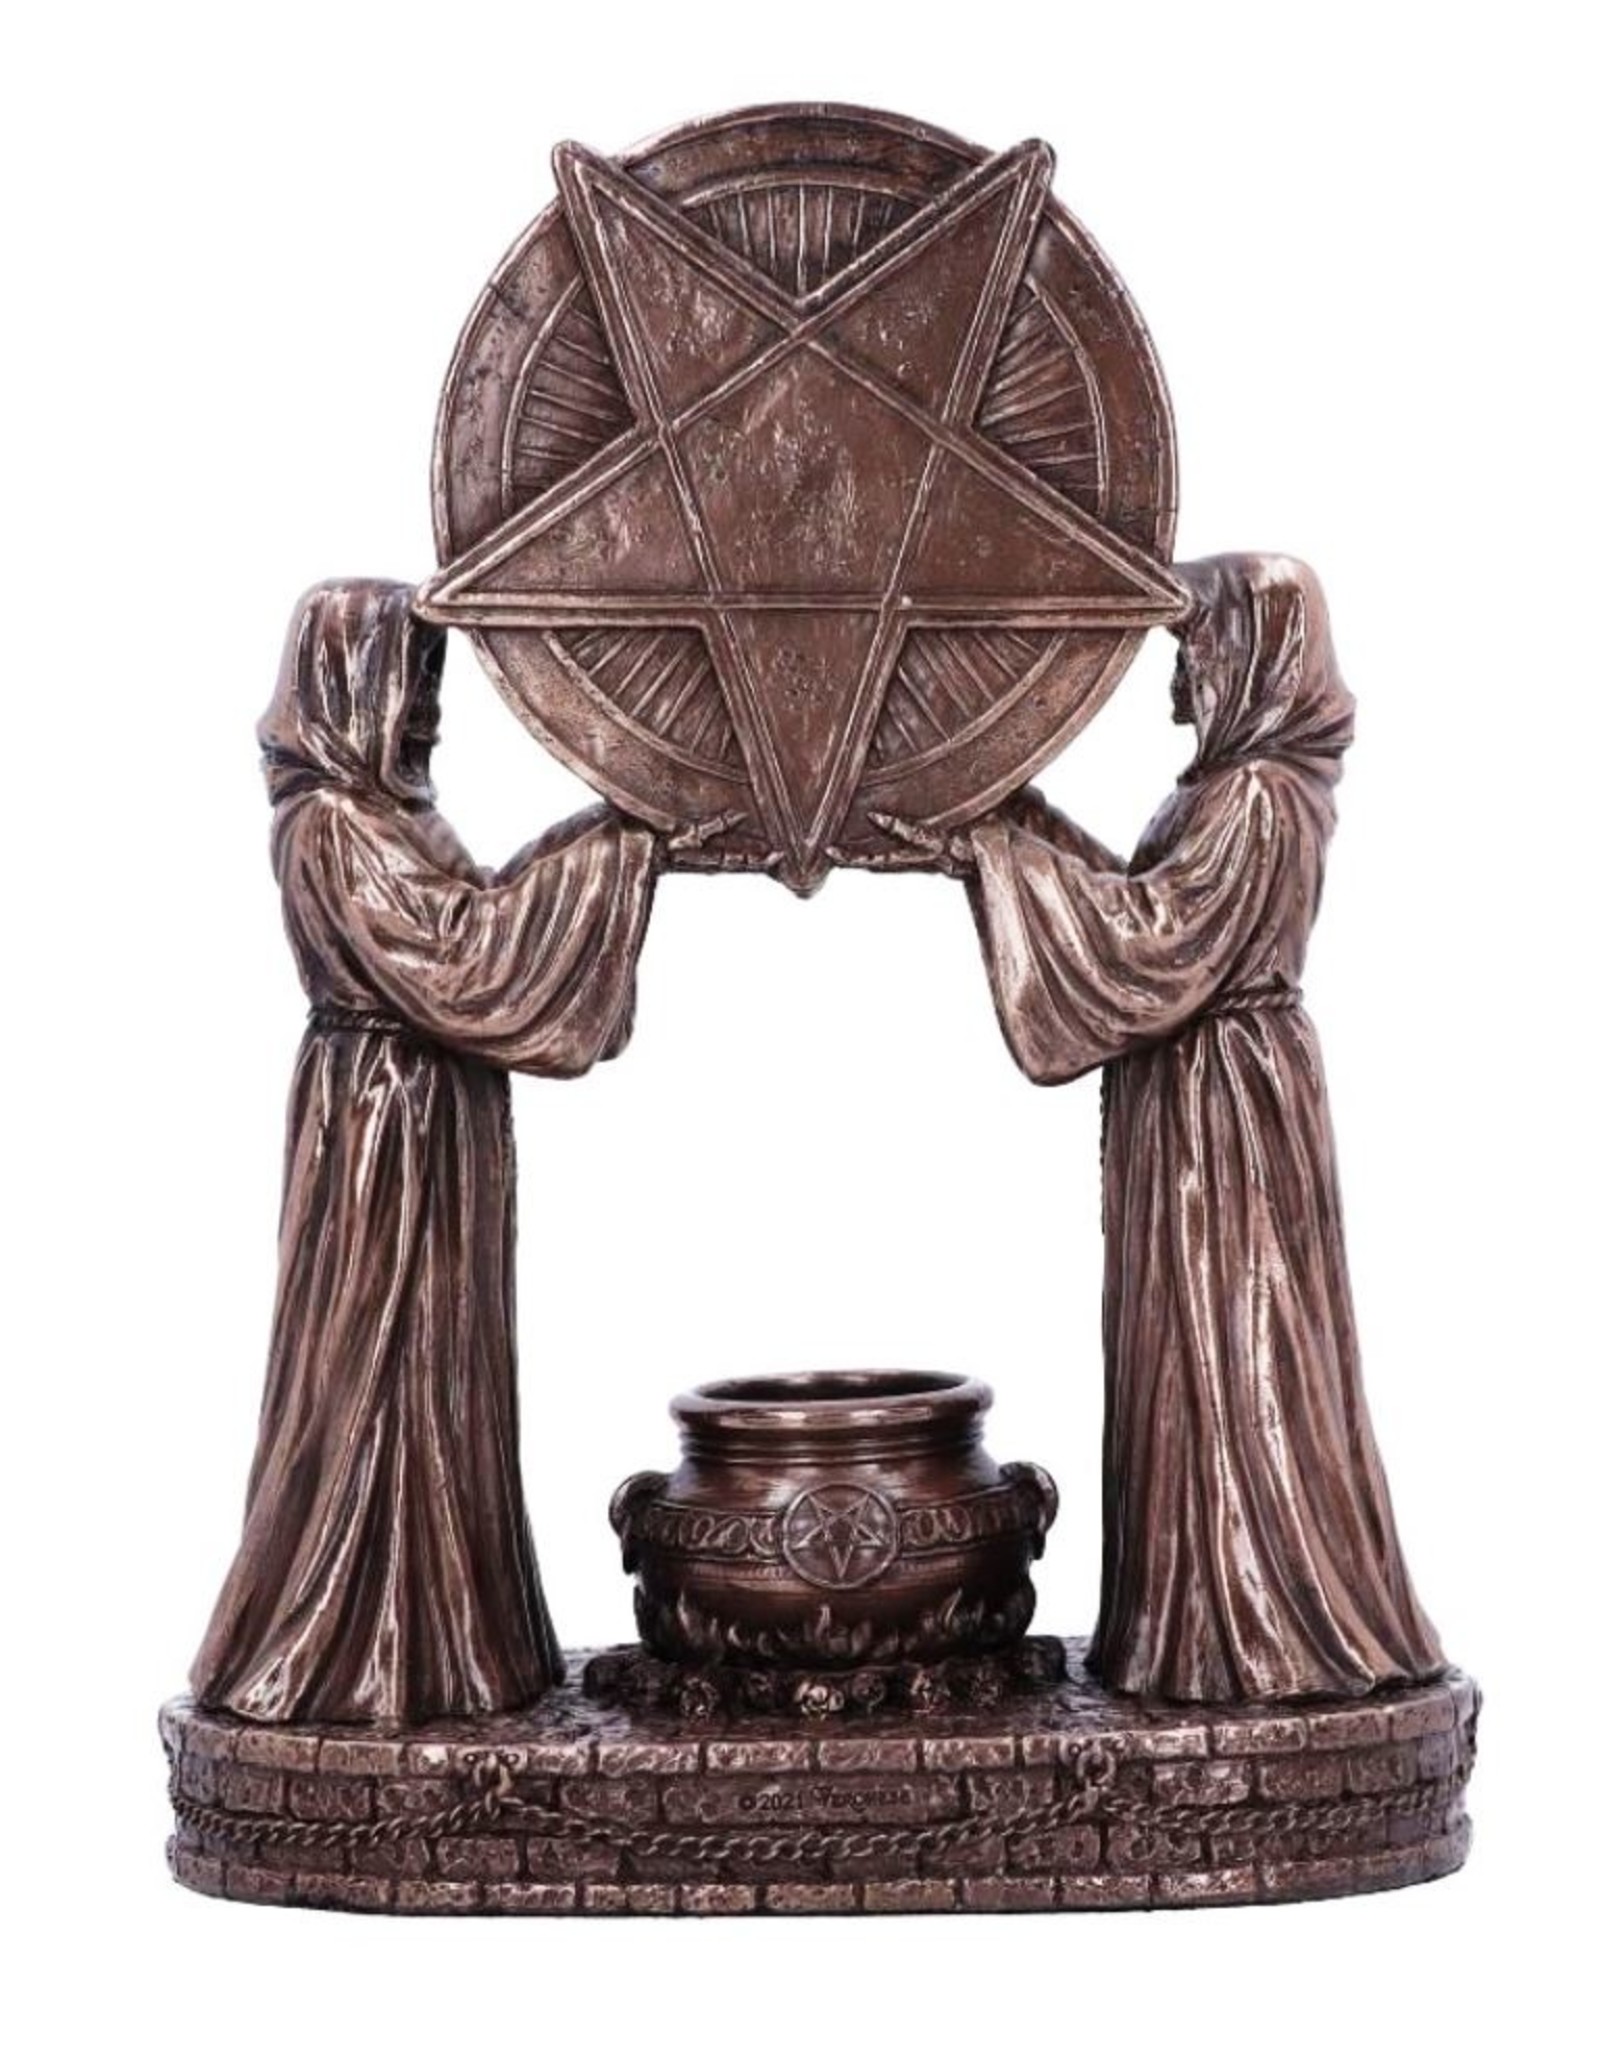 NemesisNow Giftware & Lifestyle - Baphomet's Altar Ornament 18.5cm - Bronzed